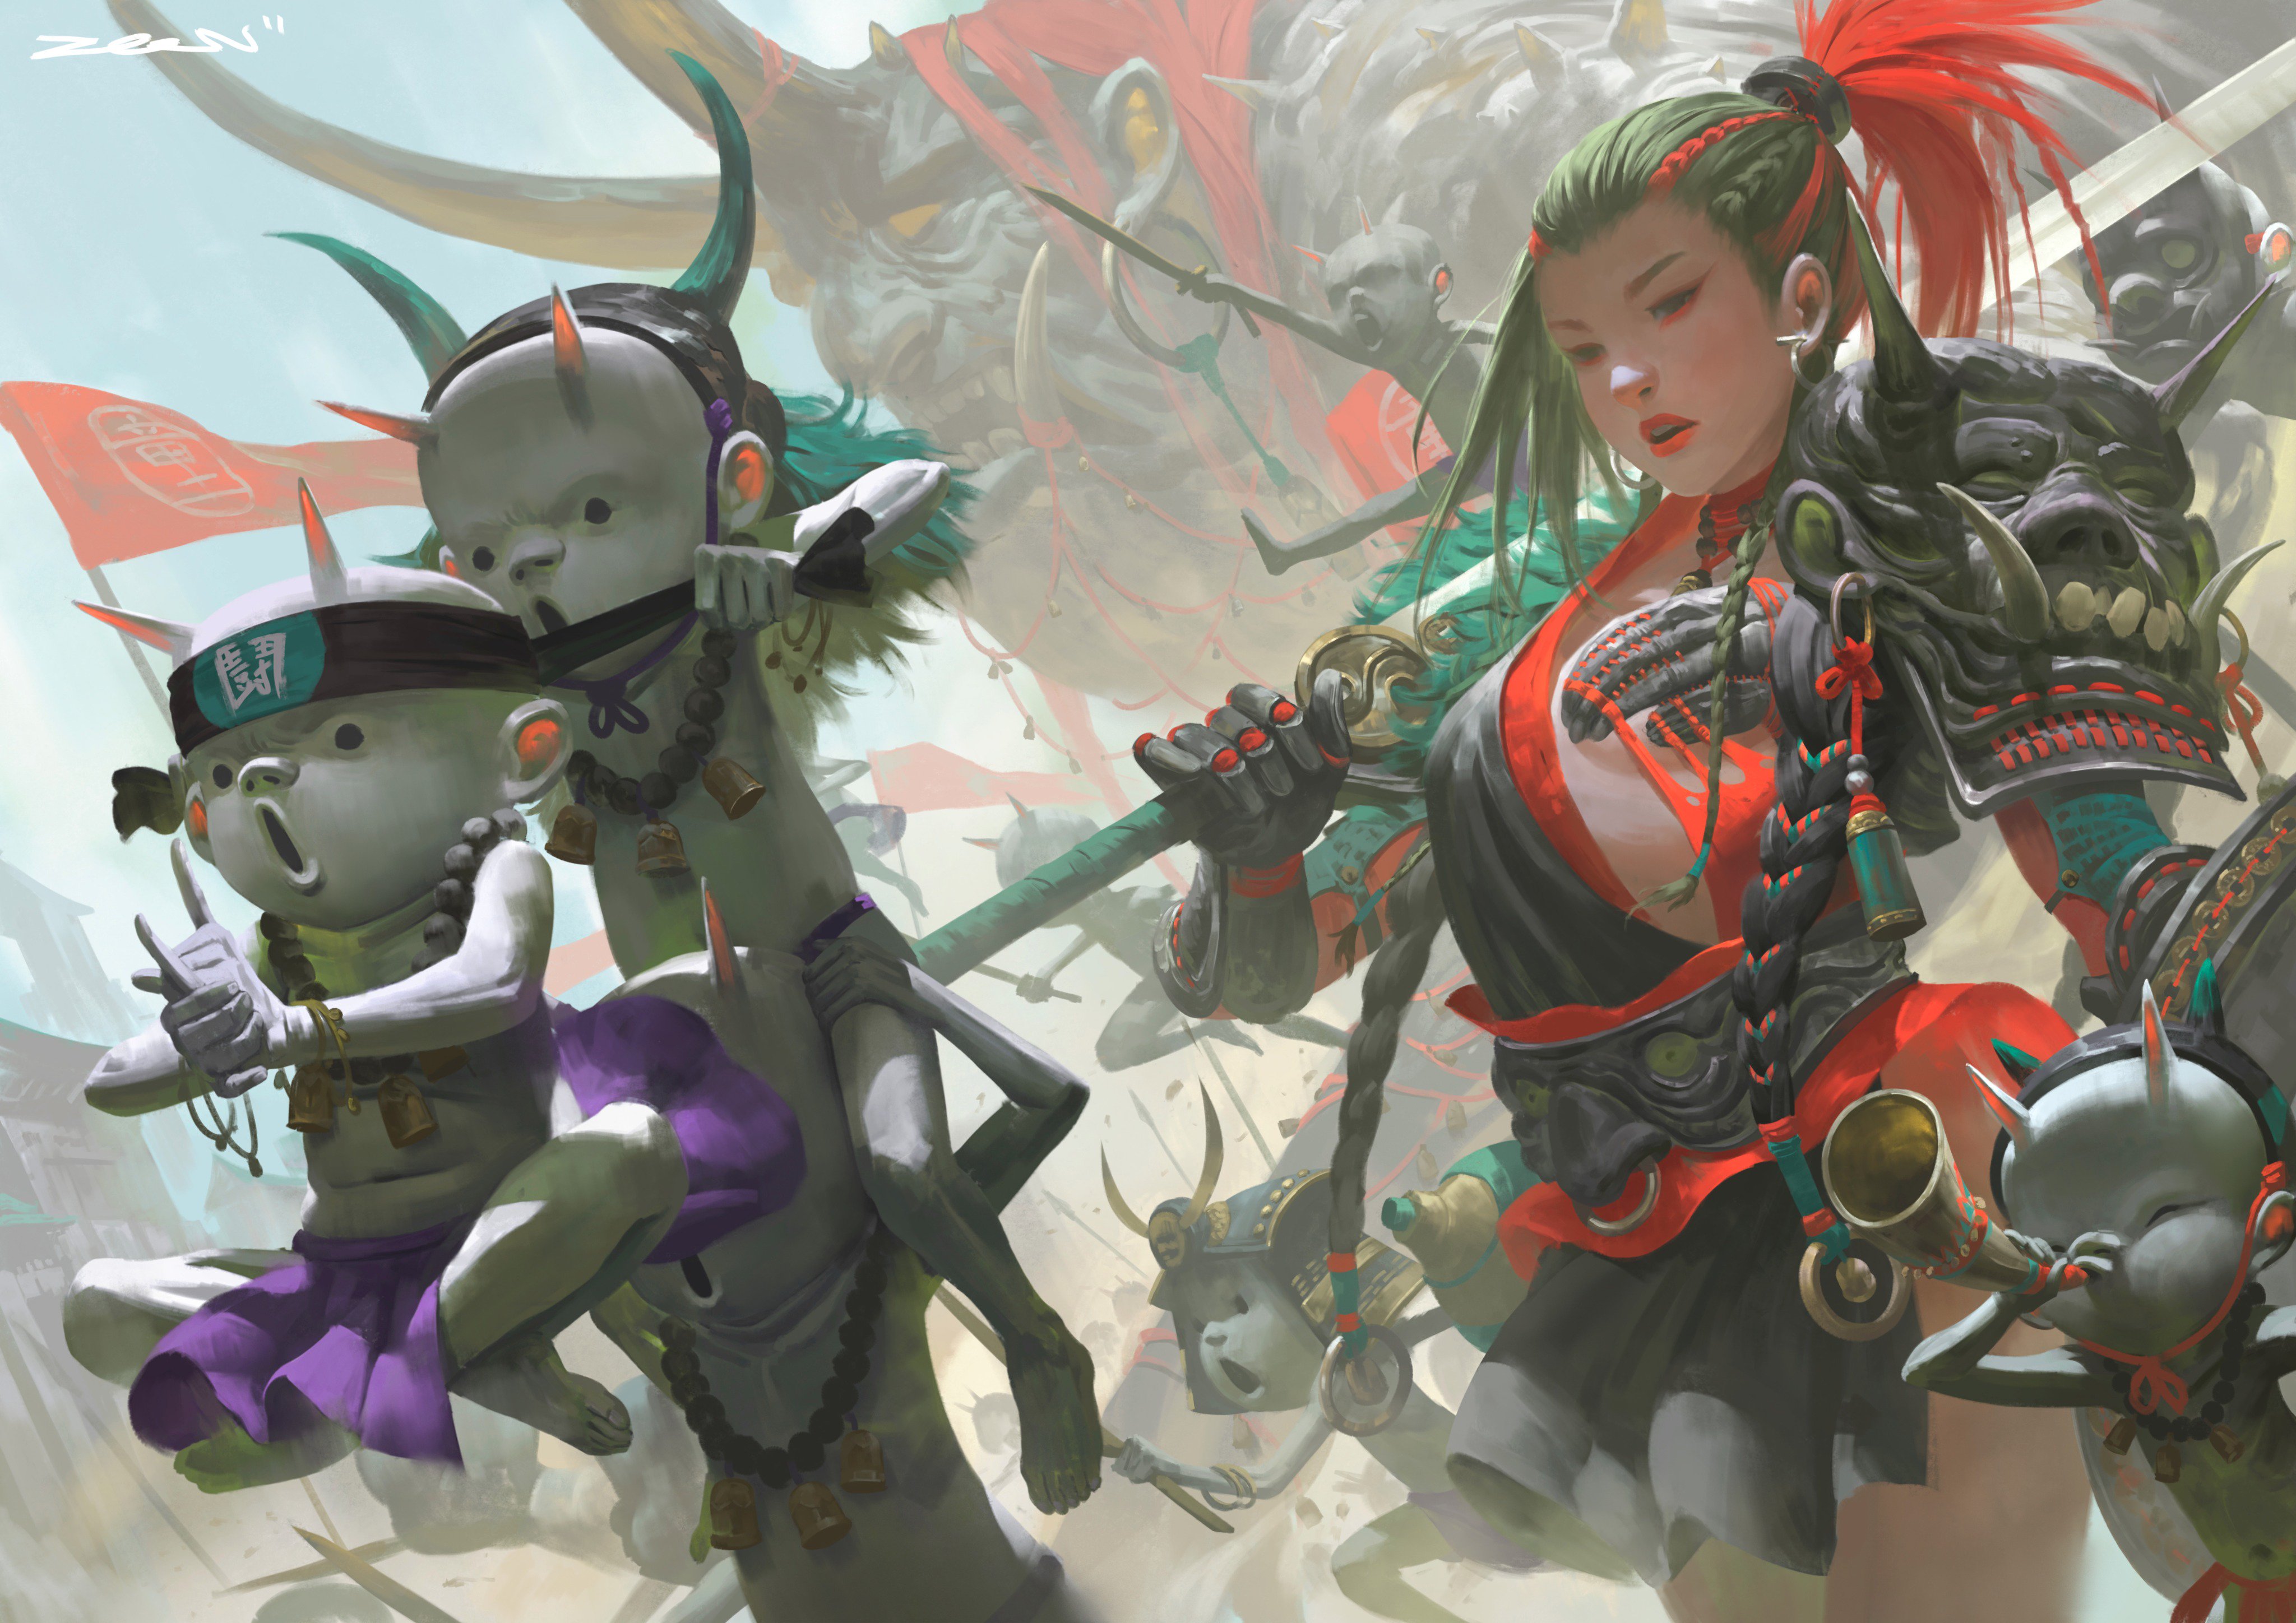 Women Warrior Girls Samurai Fantasy Girl Demon Armor Sword Weapon Fantasy Art 2D Illustration Drawin 4096x2896